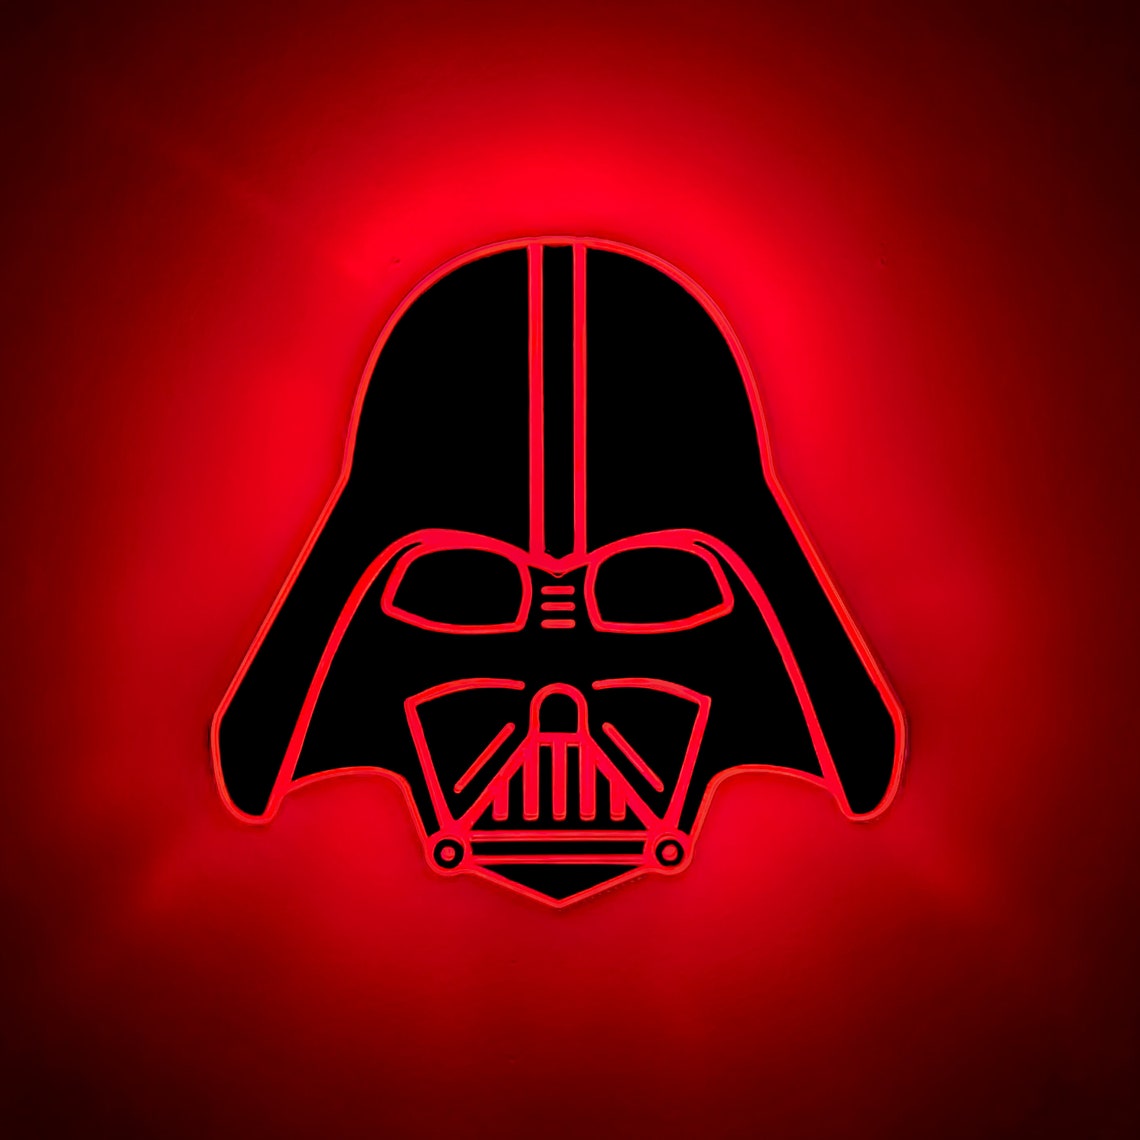 Darth Vader | Edge Lit Acrylic Signs